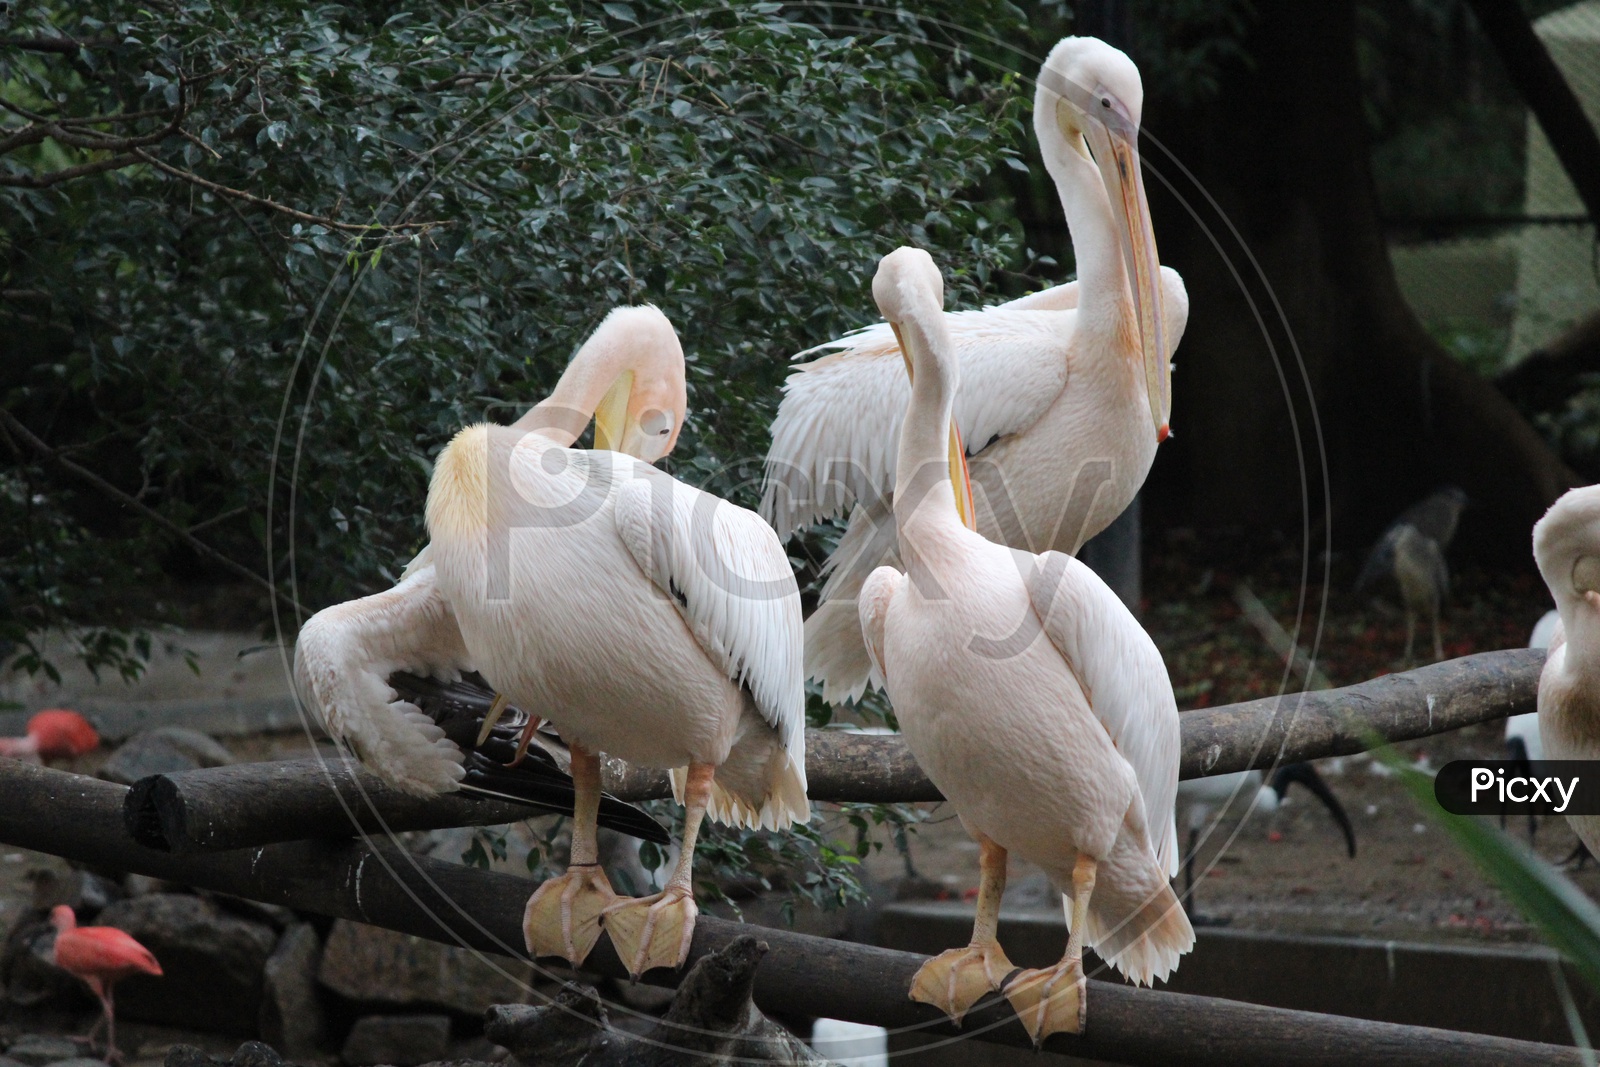 The Grooming Pelicans